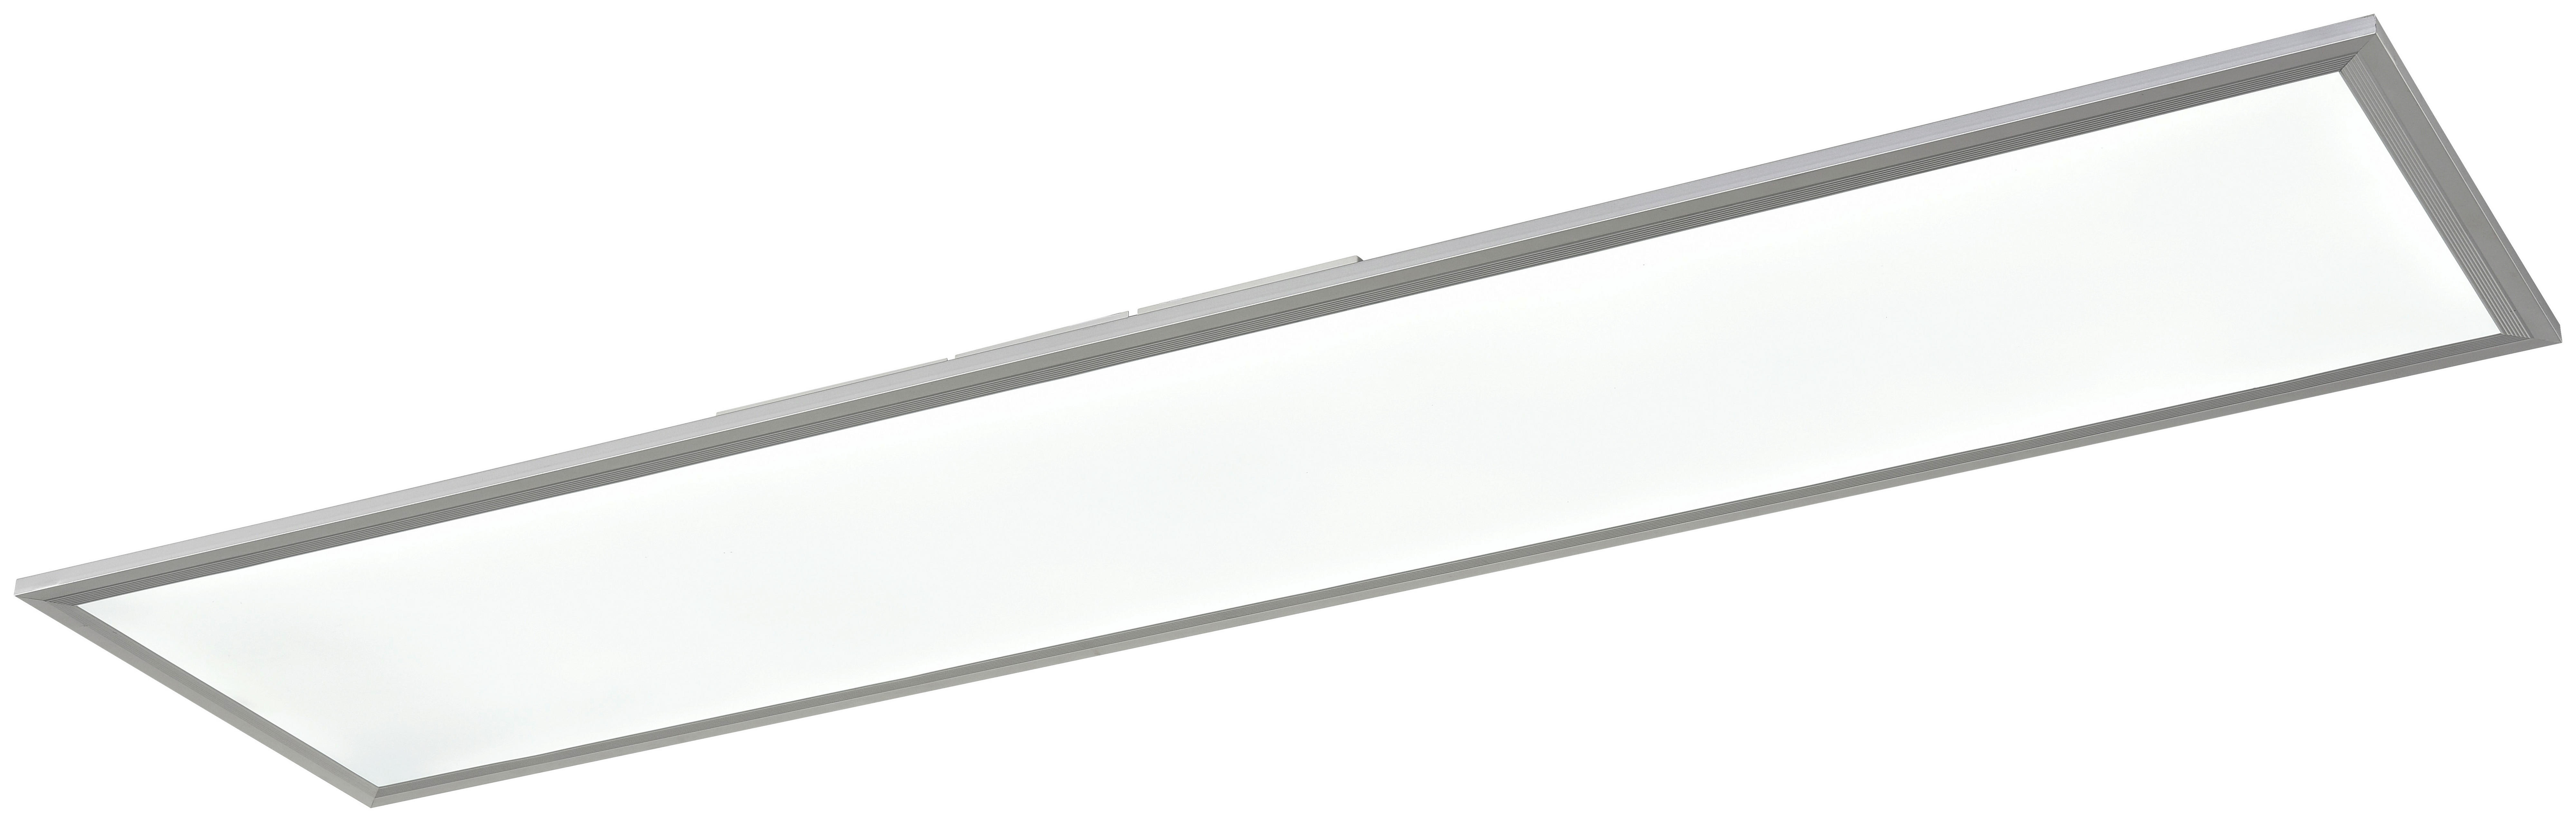 POCOline Deckenpanel Plano weiß silber Kunststoff Aluminium B/H/L: ca. 30x7x120 cm LED-Deckenpanel_Plano - weiß/silber (120,00/30,00/7,00cm)